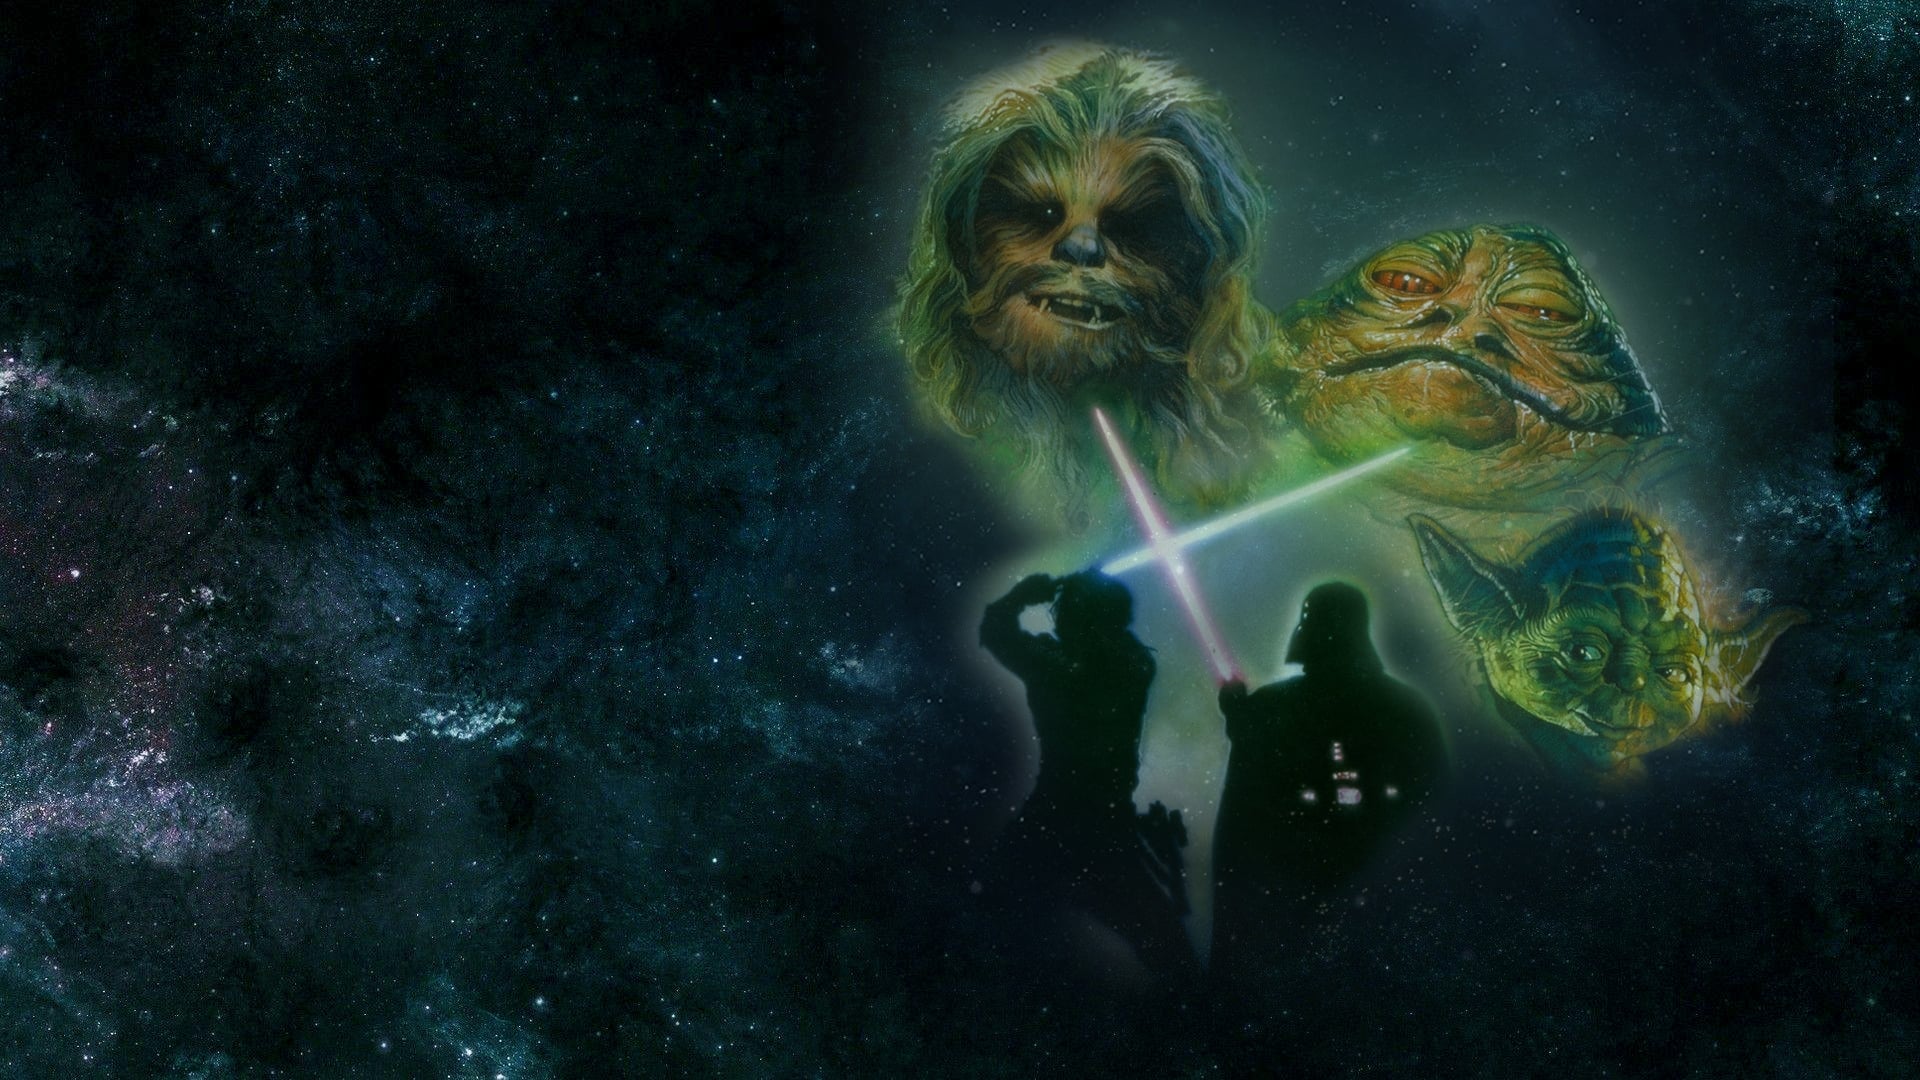 Image du film Star Wars Episode VI : le retour du Jedi qqq1hv1t4xwsl15fan8npnood4kjpg